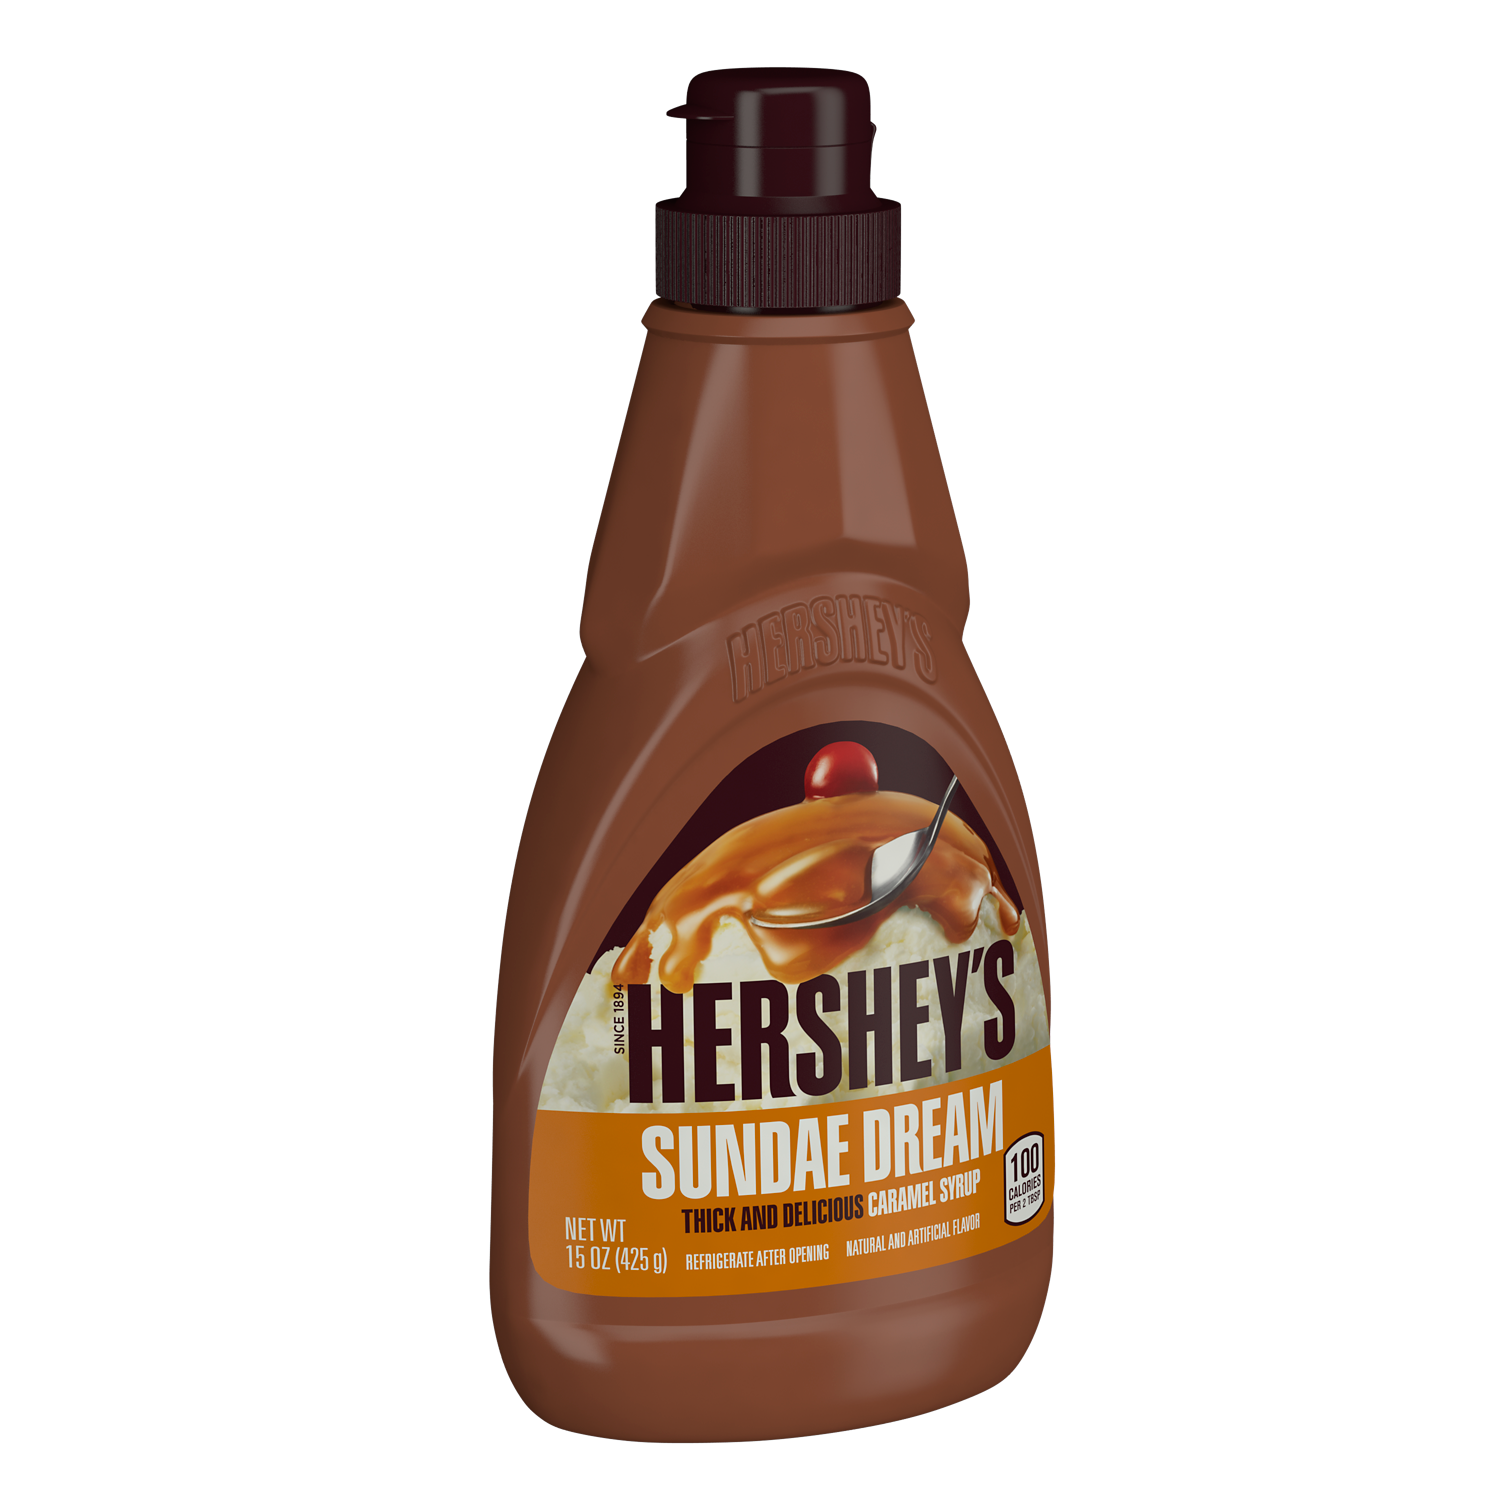 HERSHEY'S SUNDAE DREAM Caramel Syrup, 15 oz bottle - Left Side of Package